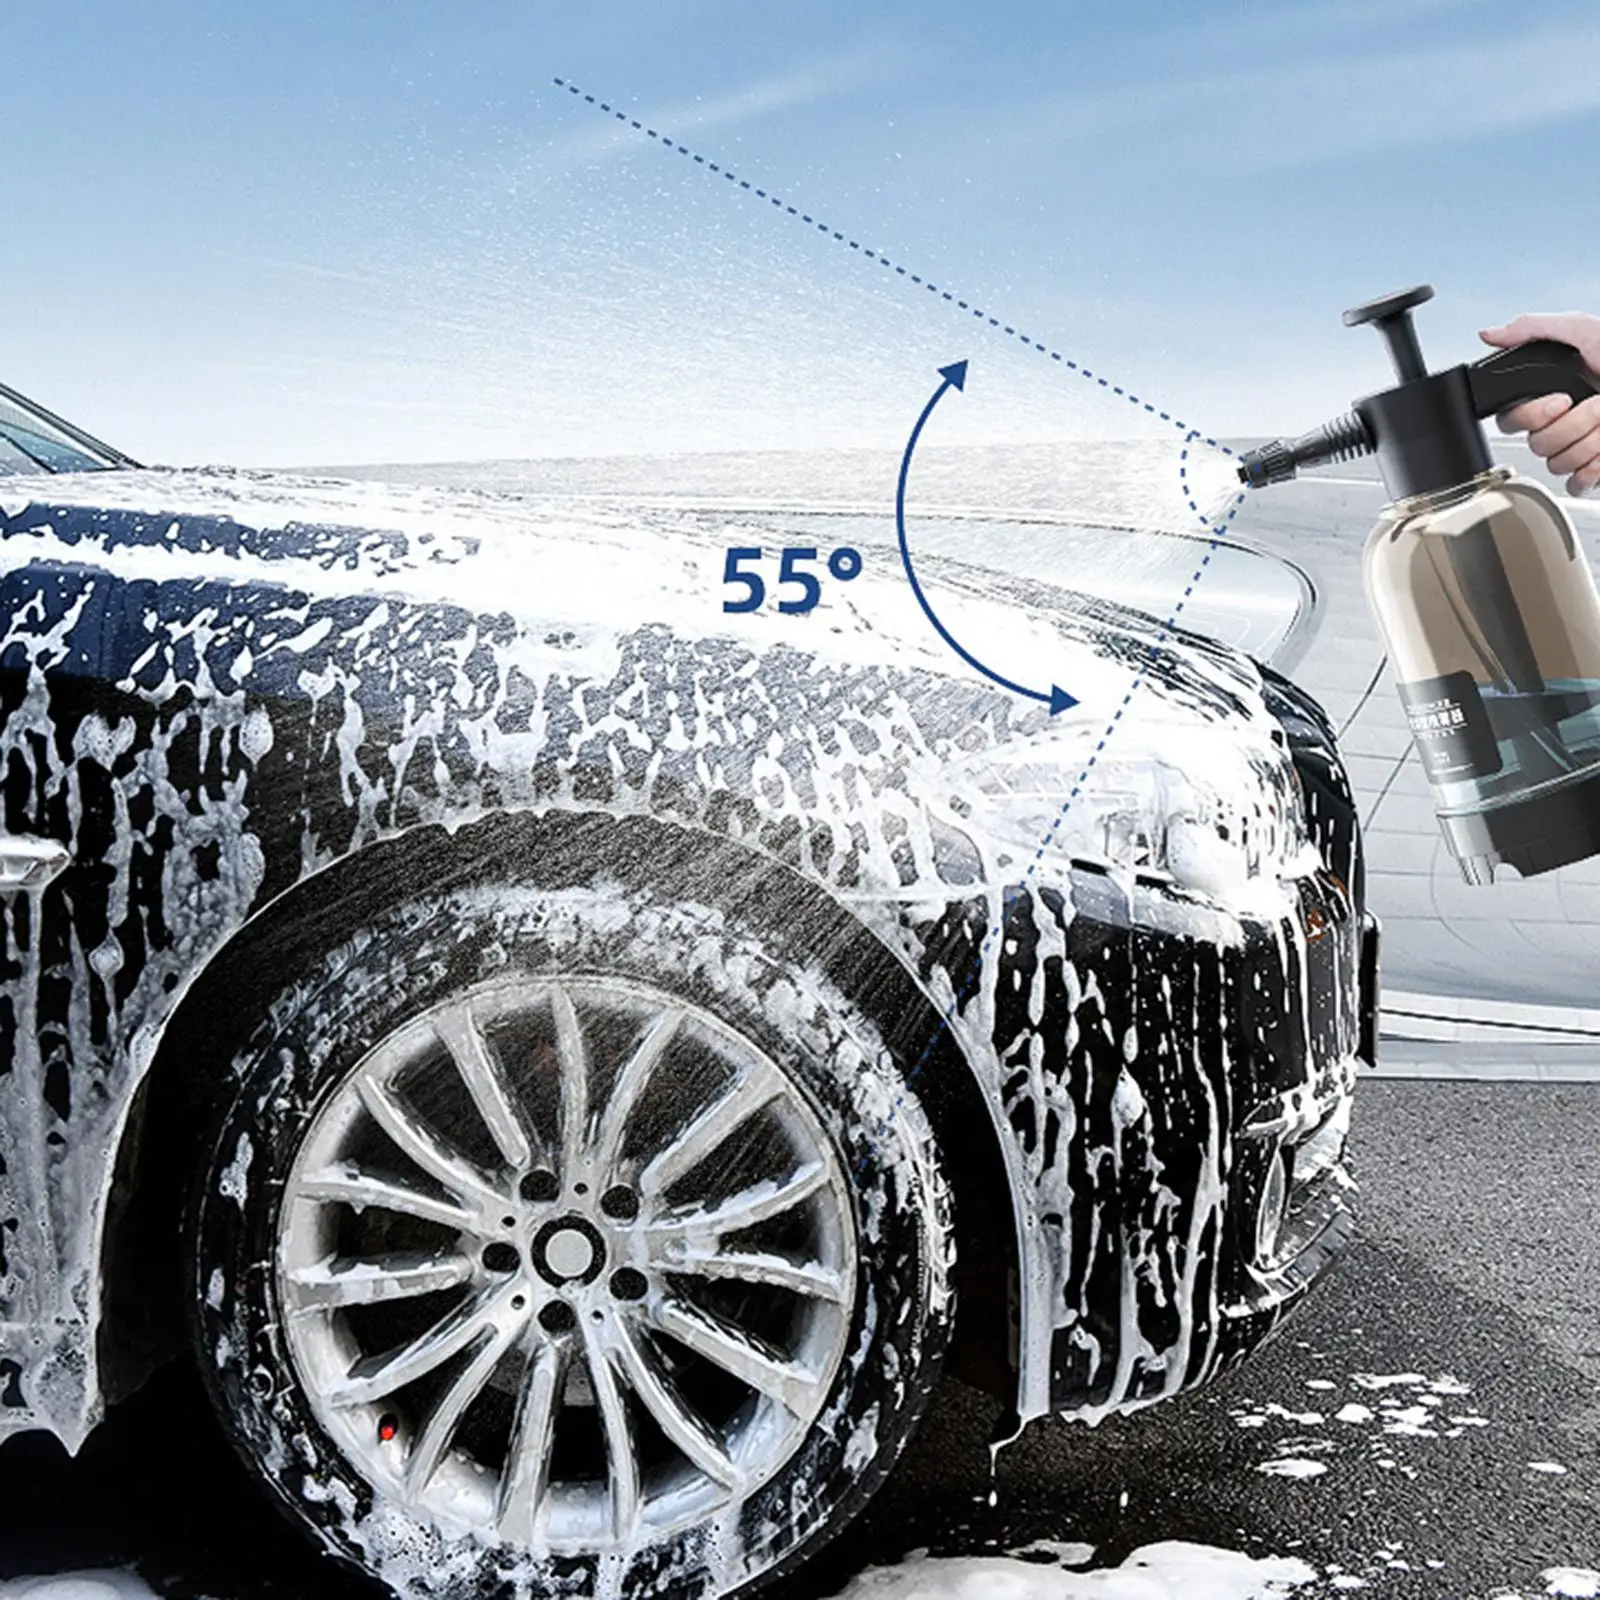 Portable 2L Car Wash Foam Pressure Sprayer Continuous Auto Cleaning Equipment